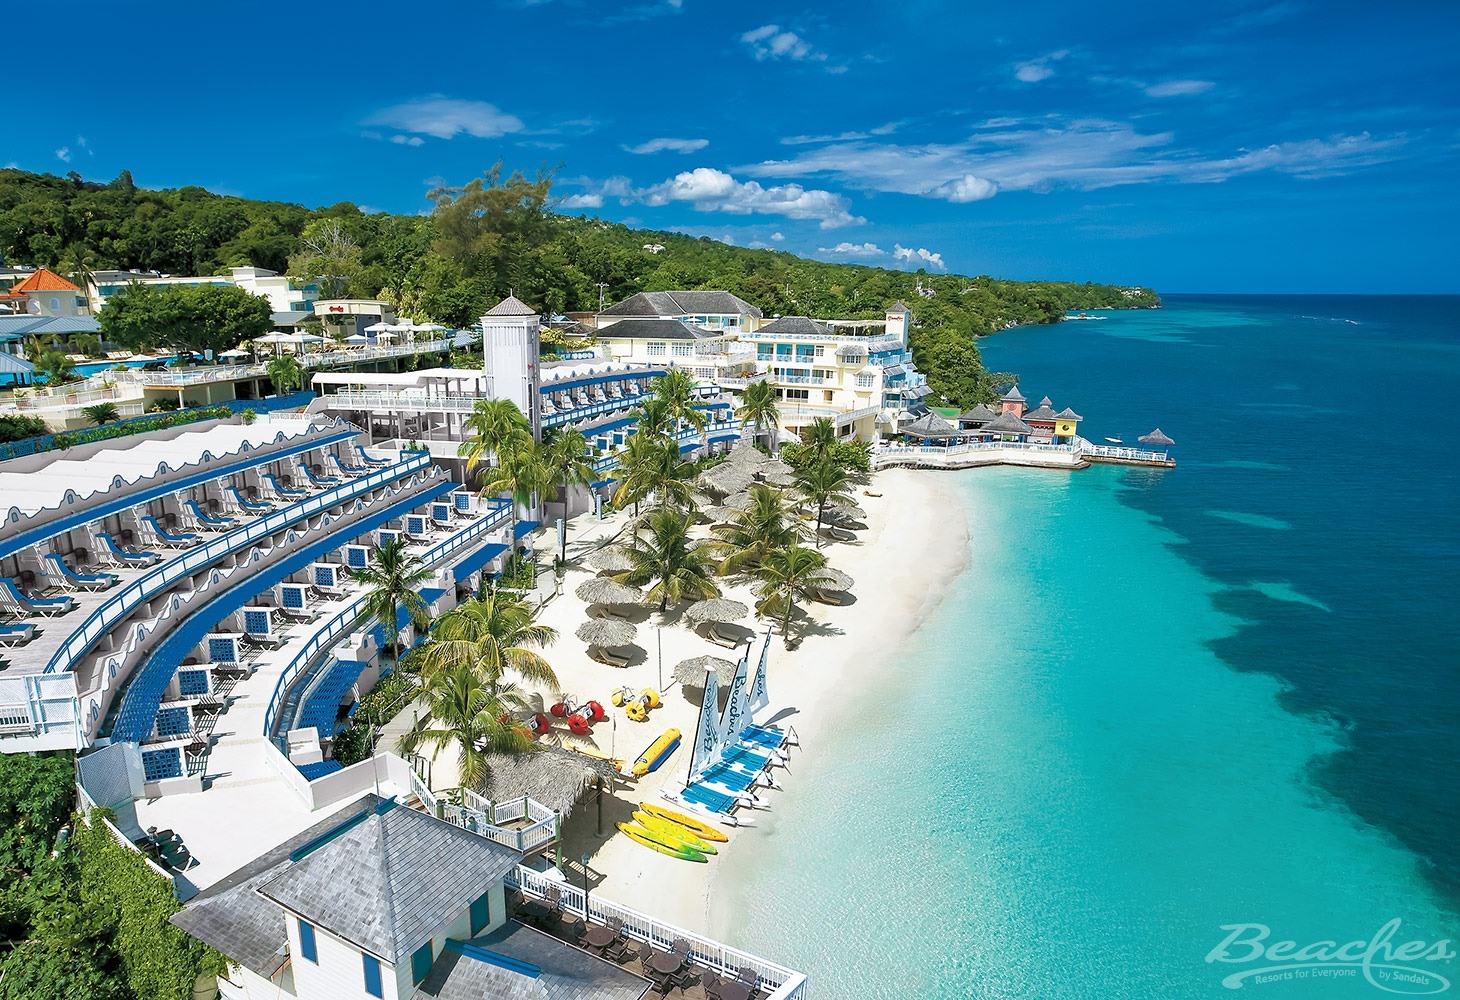 Beaches Ocho Rios, Jamaica Luxury AllInclusive Low Cost Deals